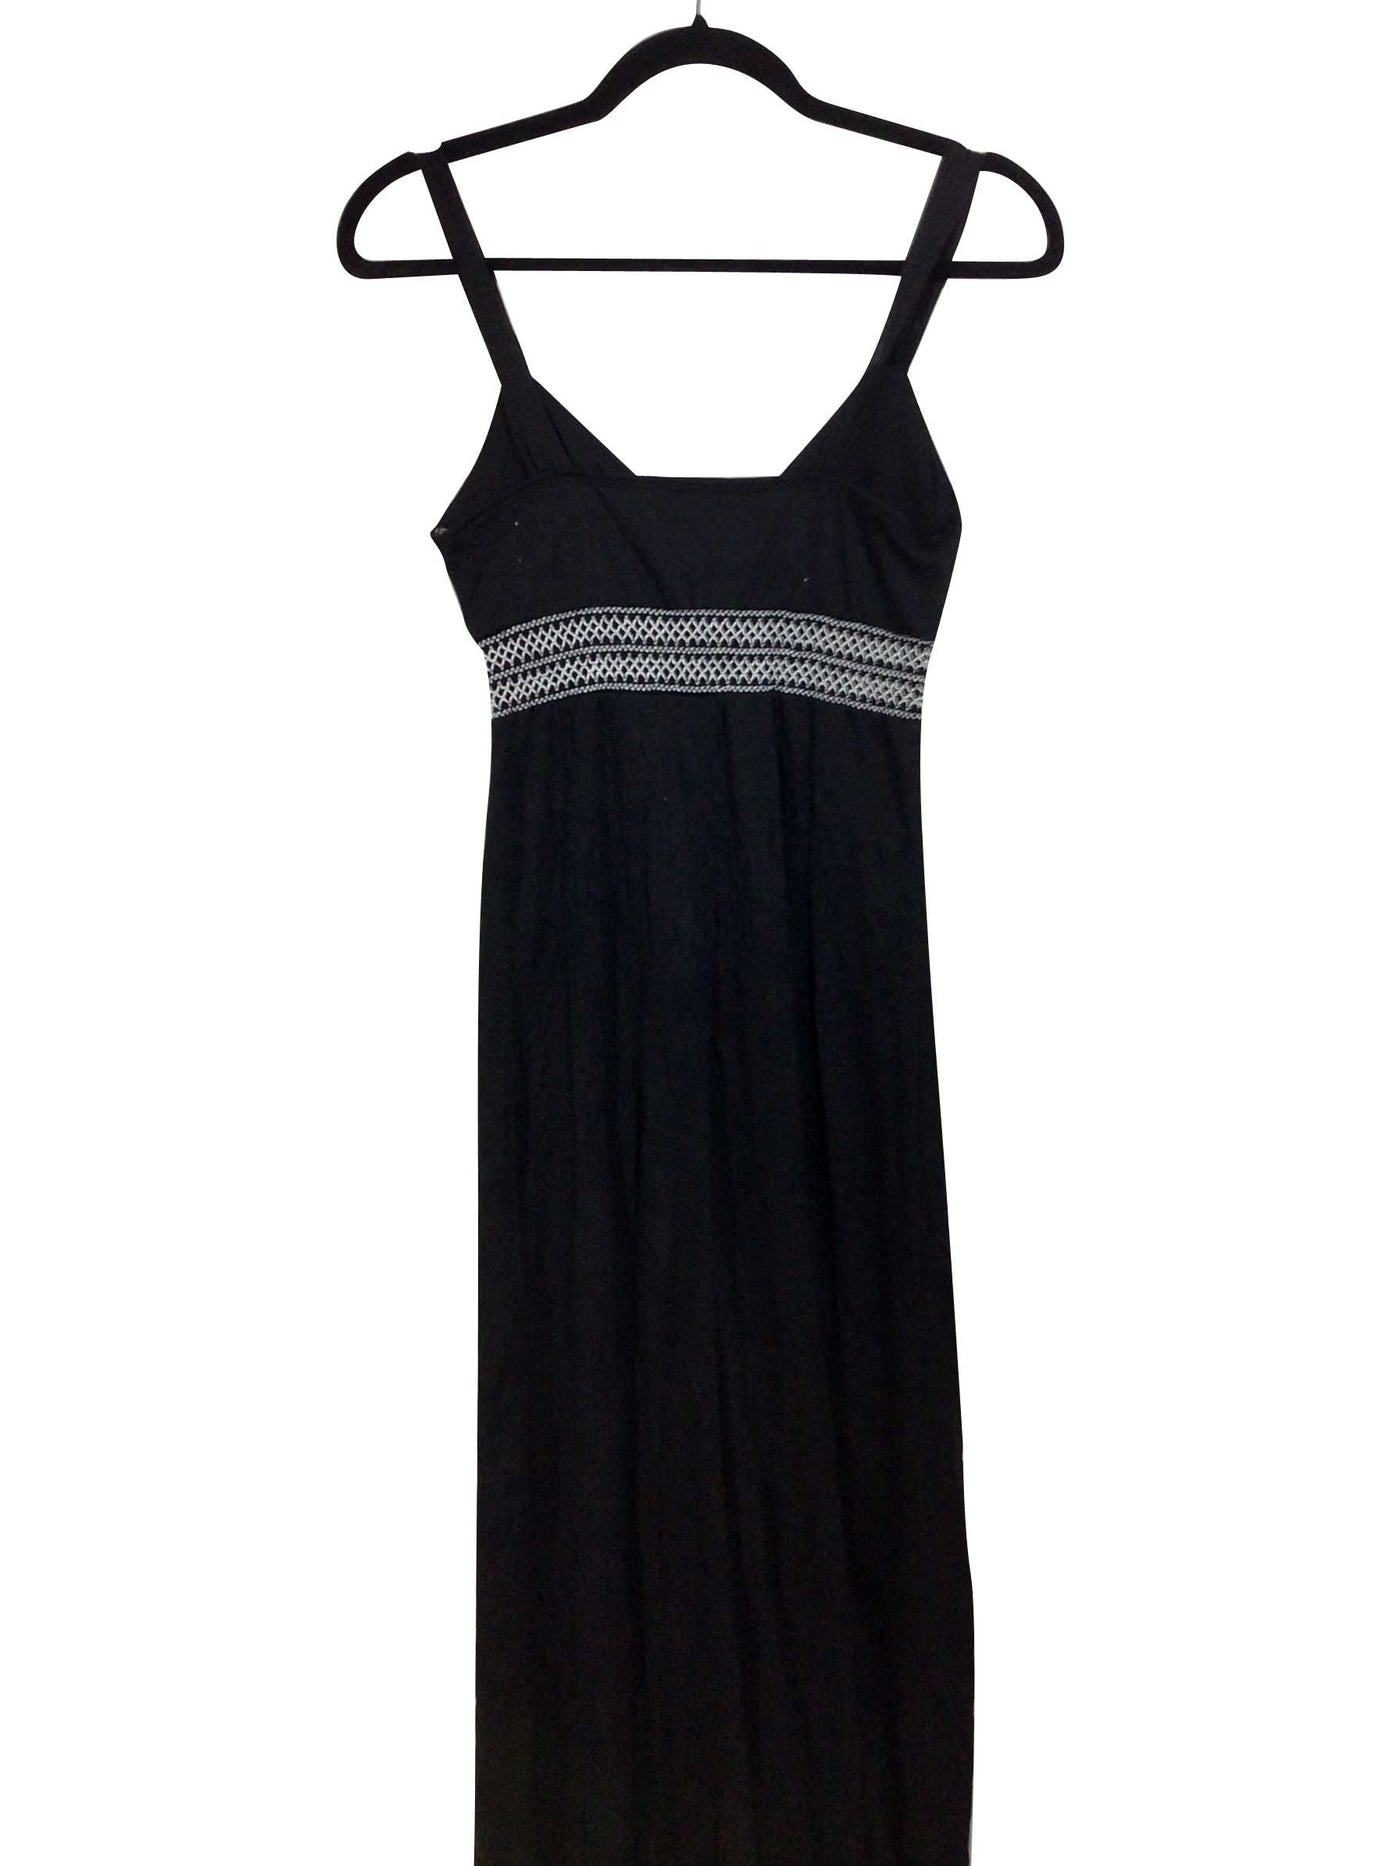 6 DEGREES Regular fit Maxi Dress in Black - Size S | 12.34 $ KOOP